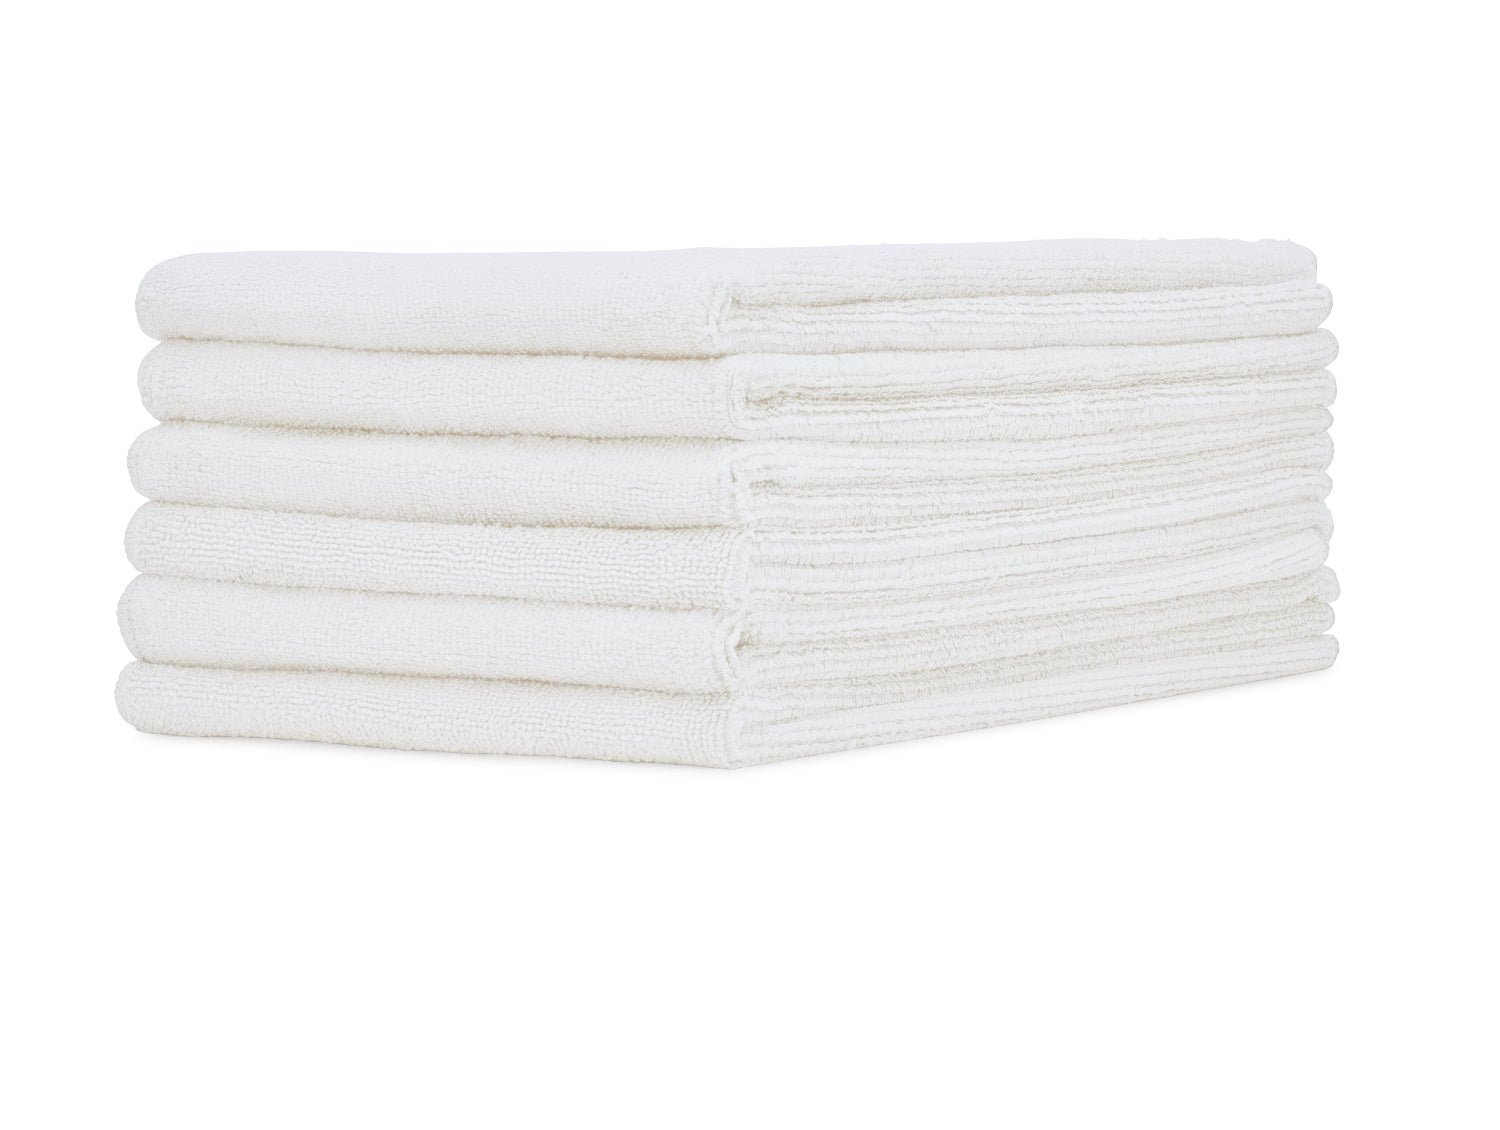 16 x 24 Microfiber Towels White 6 Pack